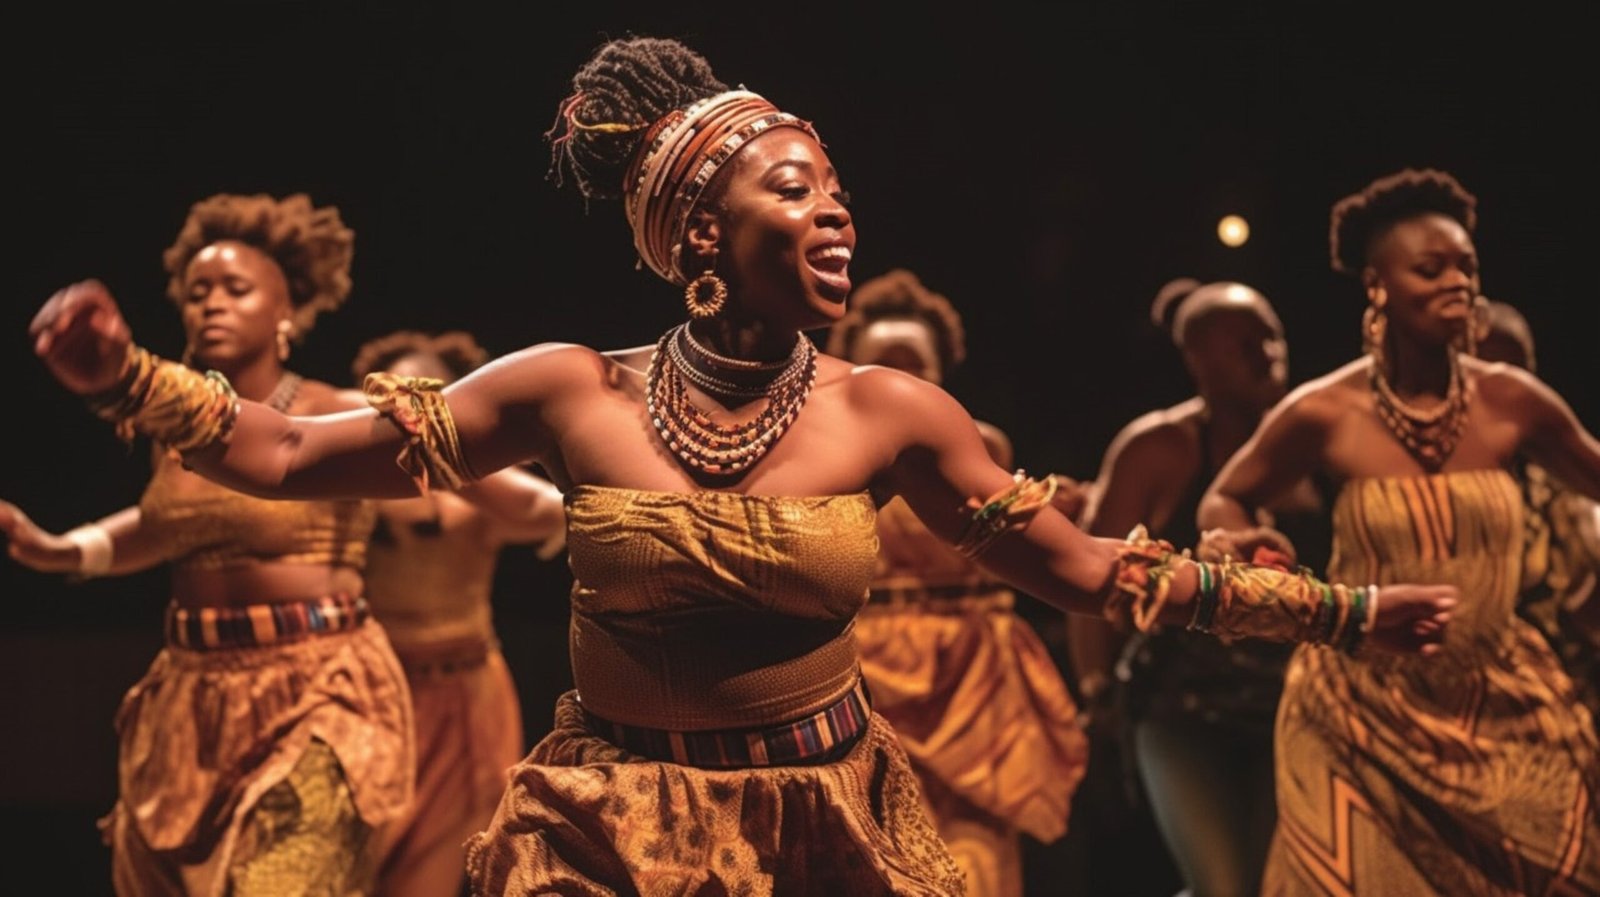 spectacle-danse-africaine-au-festival-afro-americain